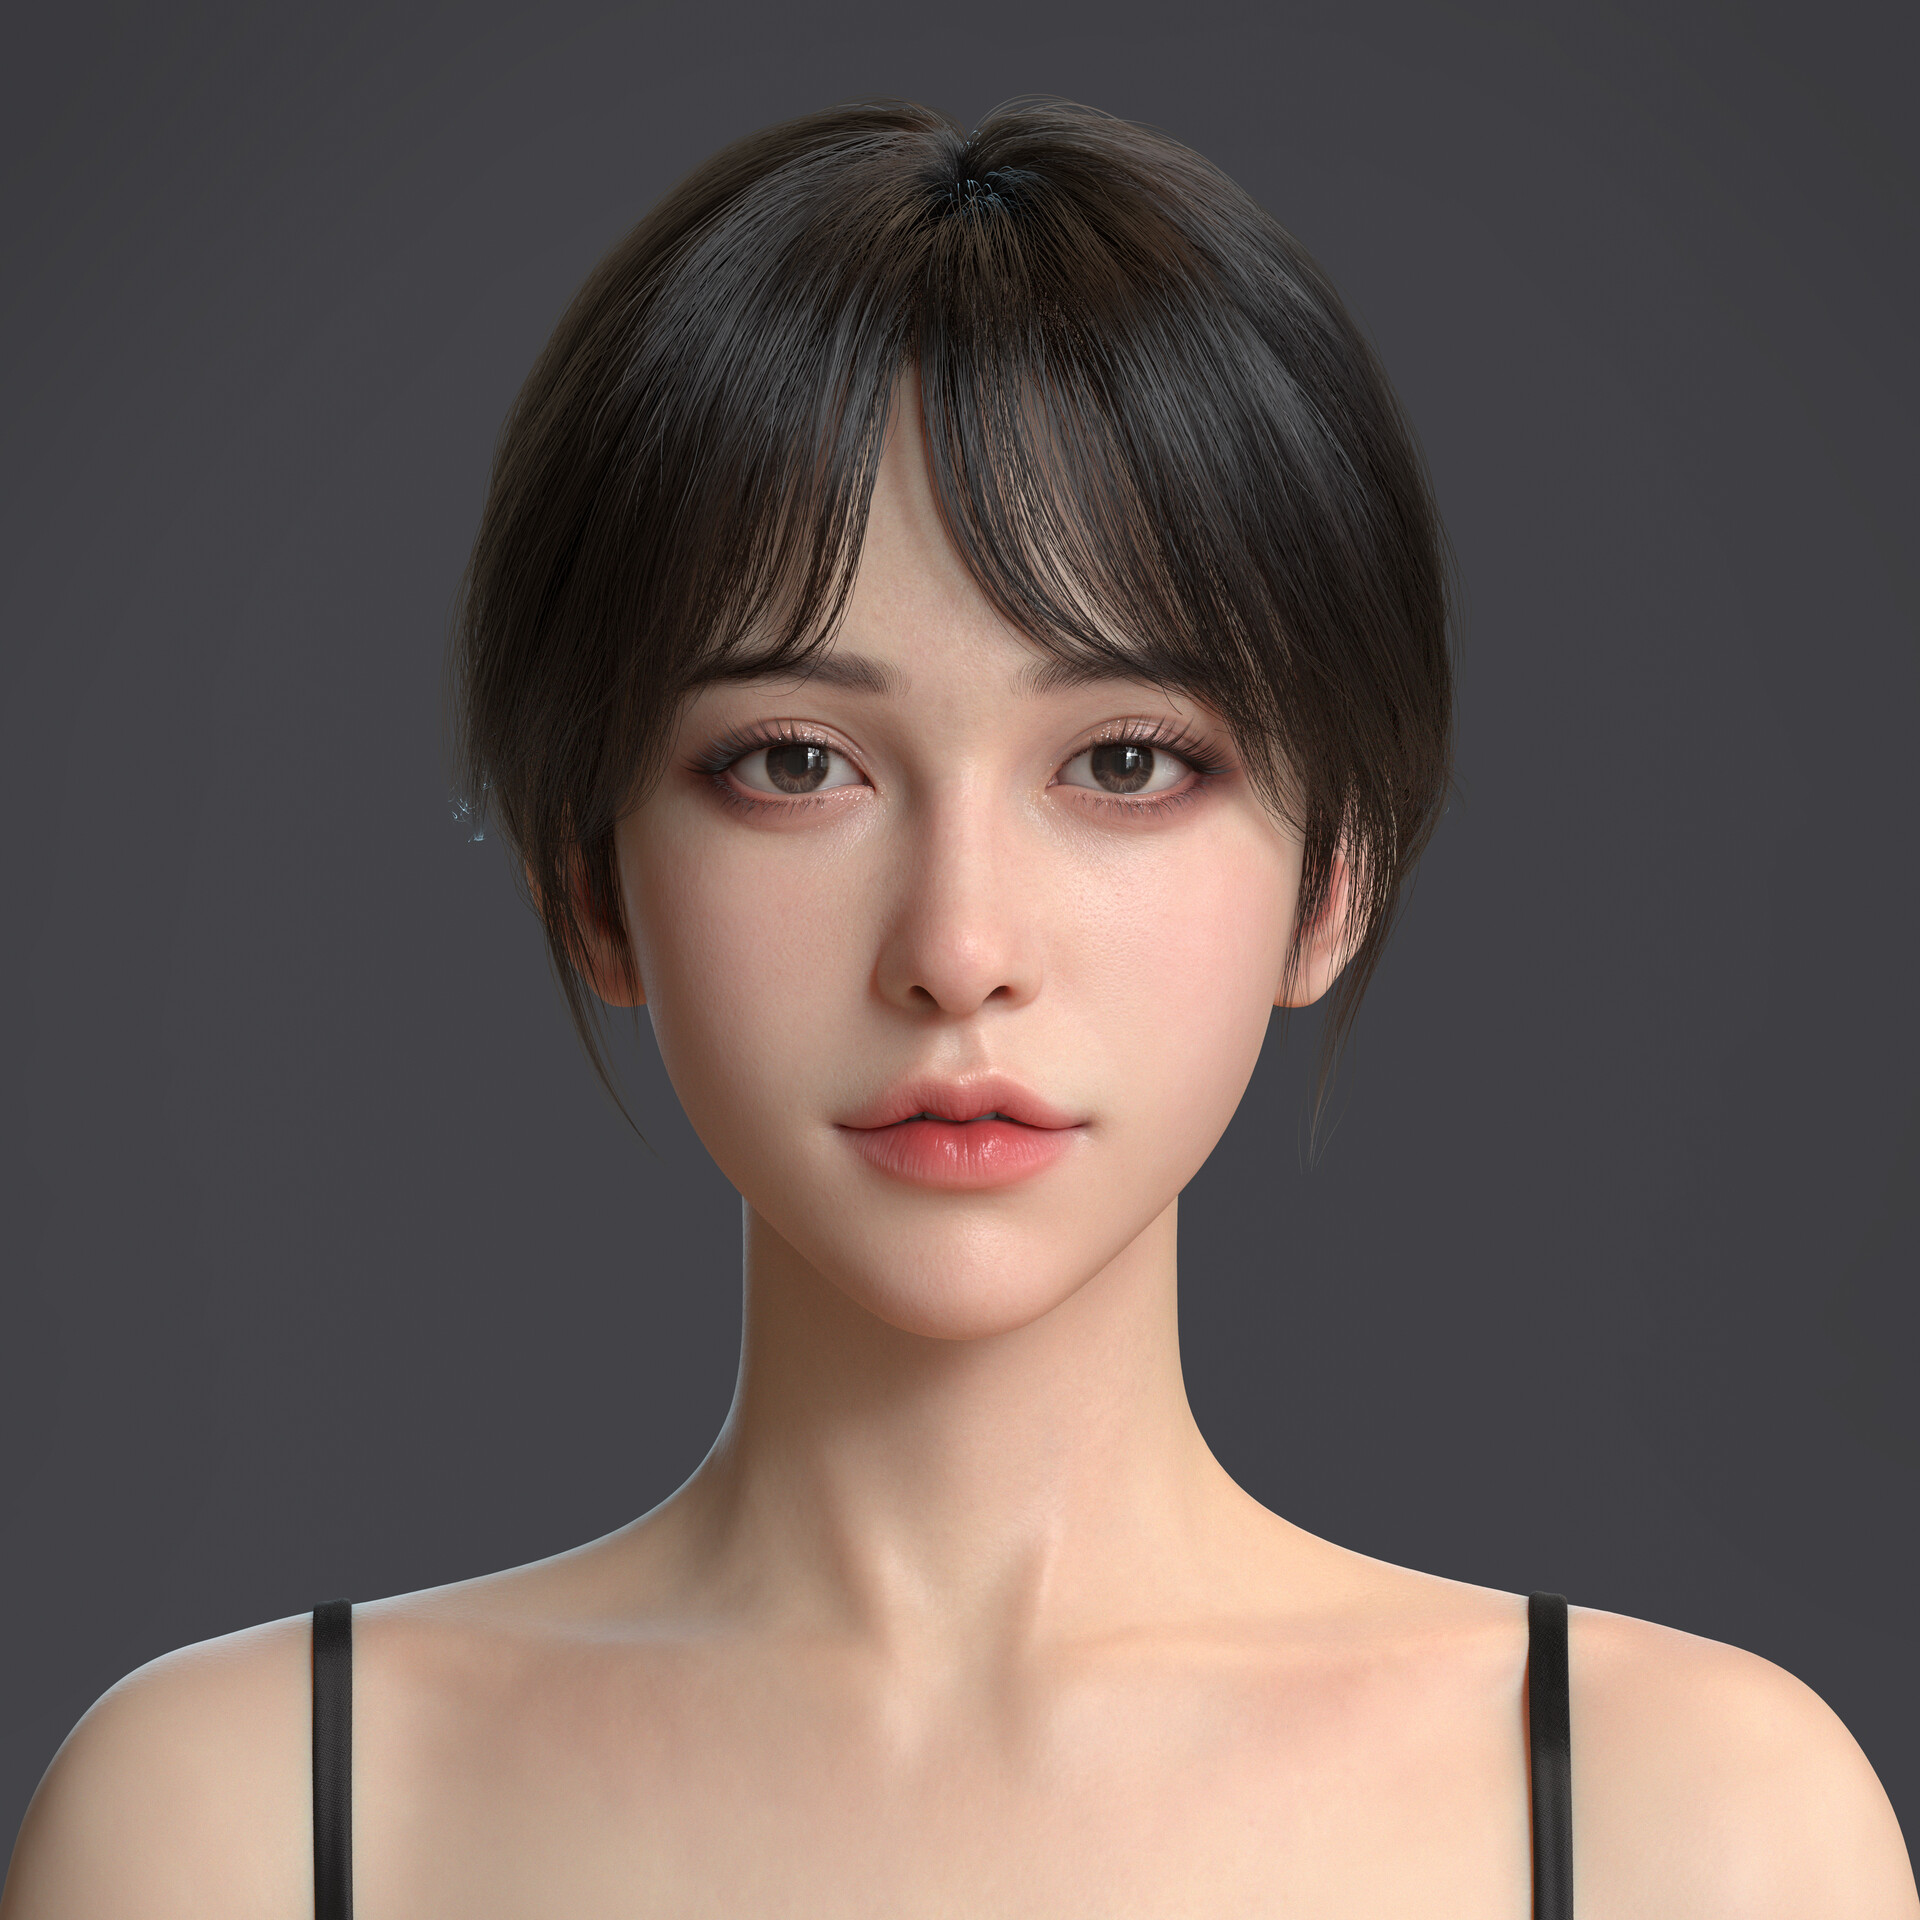 Digital Art Artwork ArtStation Digital Render Women Portrait Face Asian Gray Background Simple Backg 1920x1920